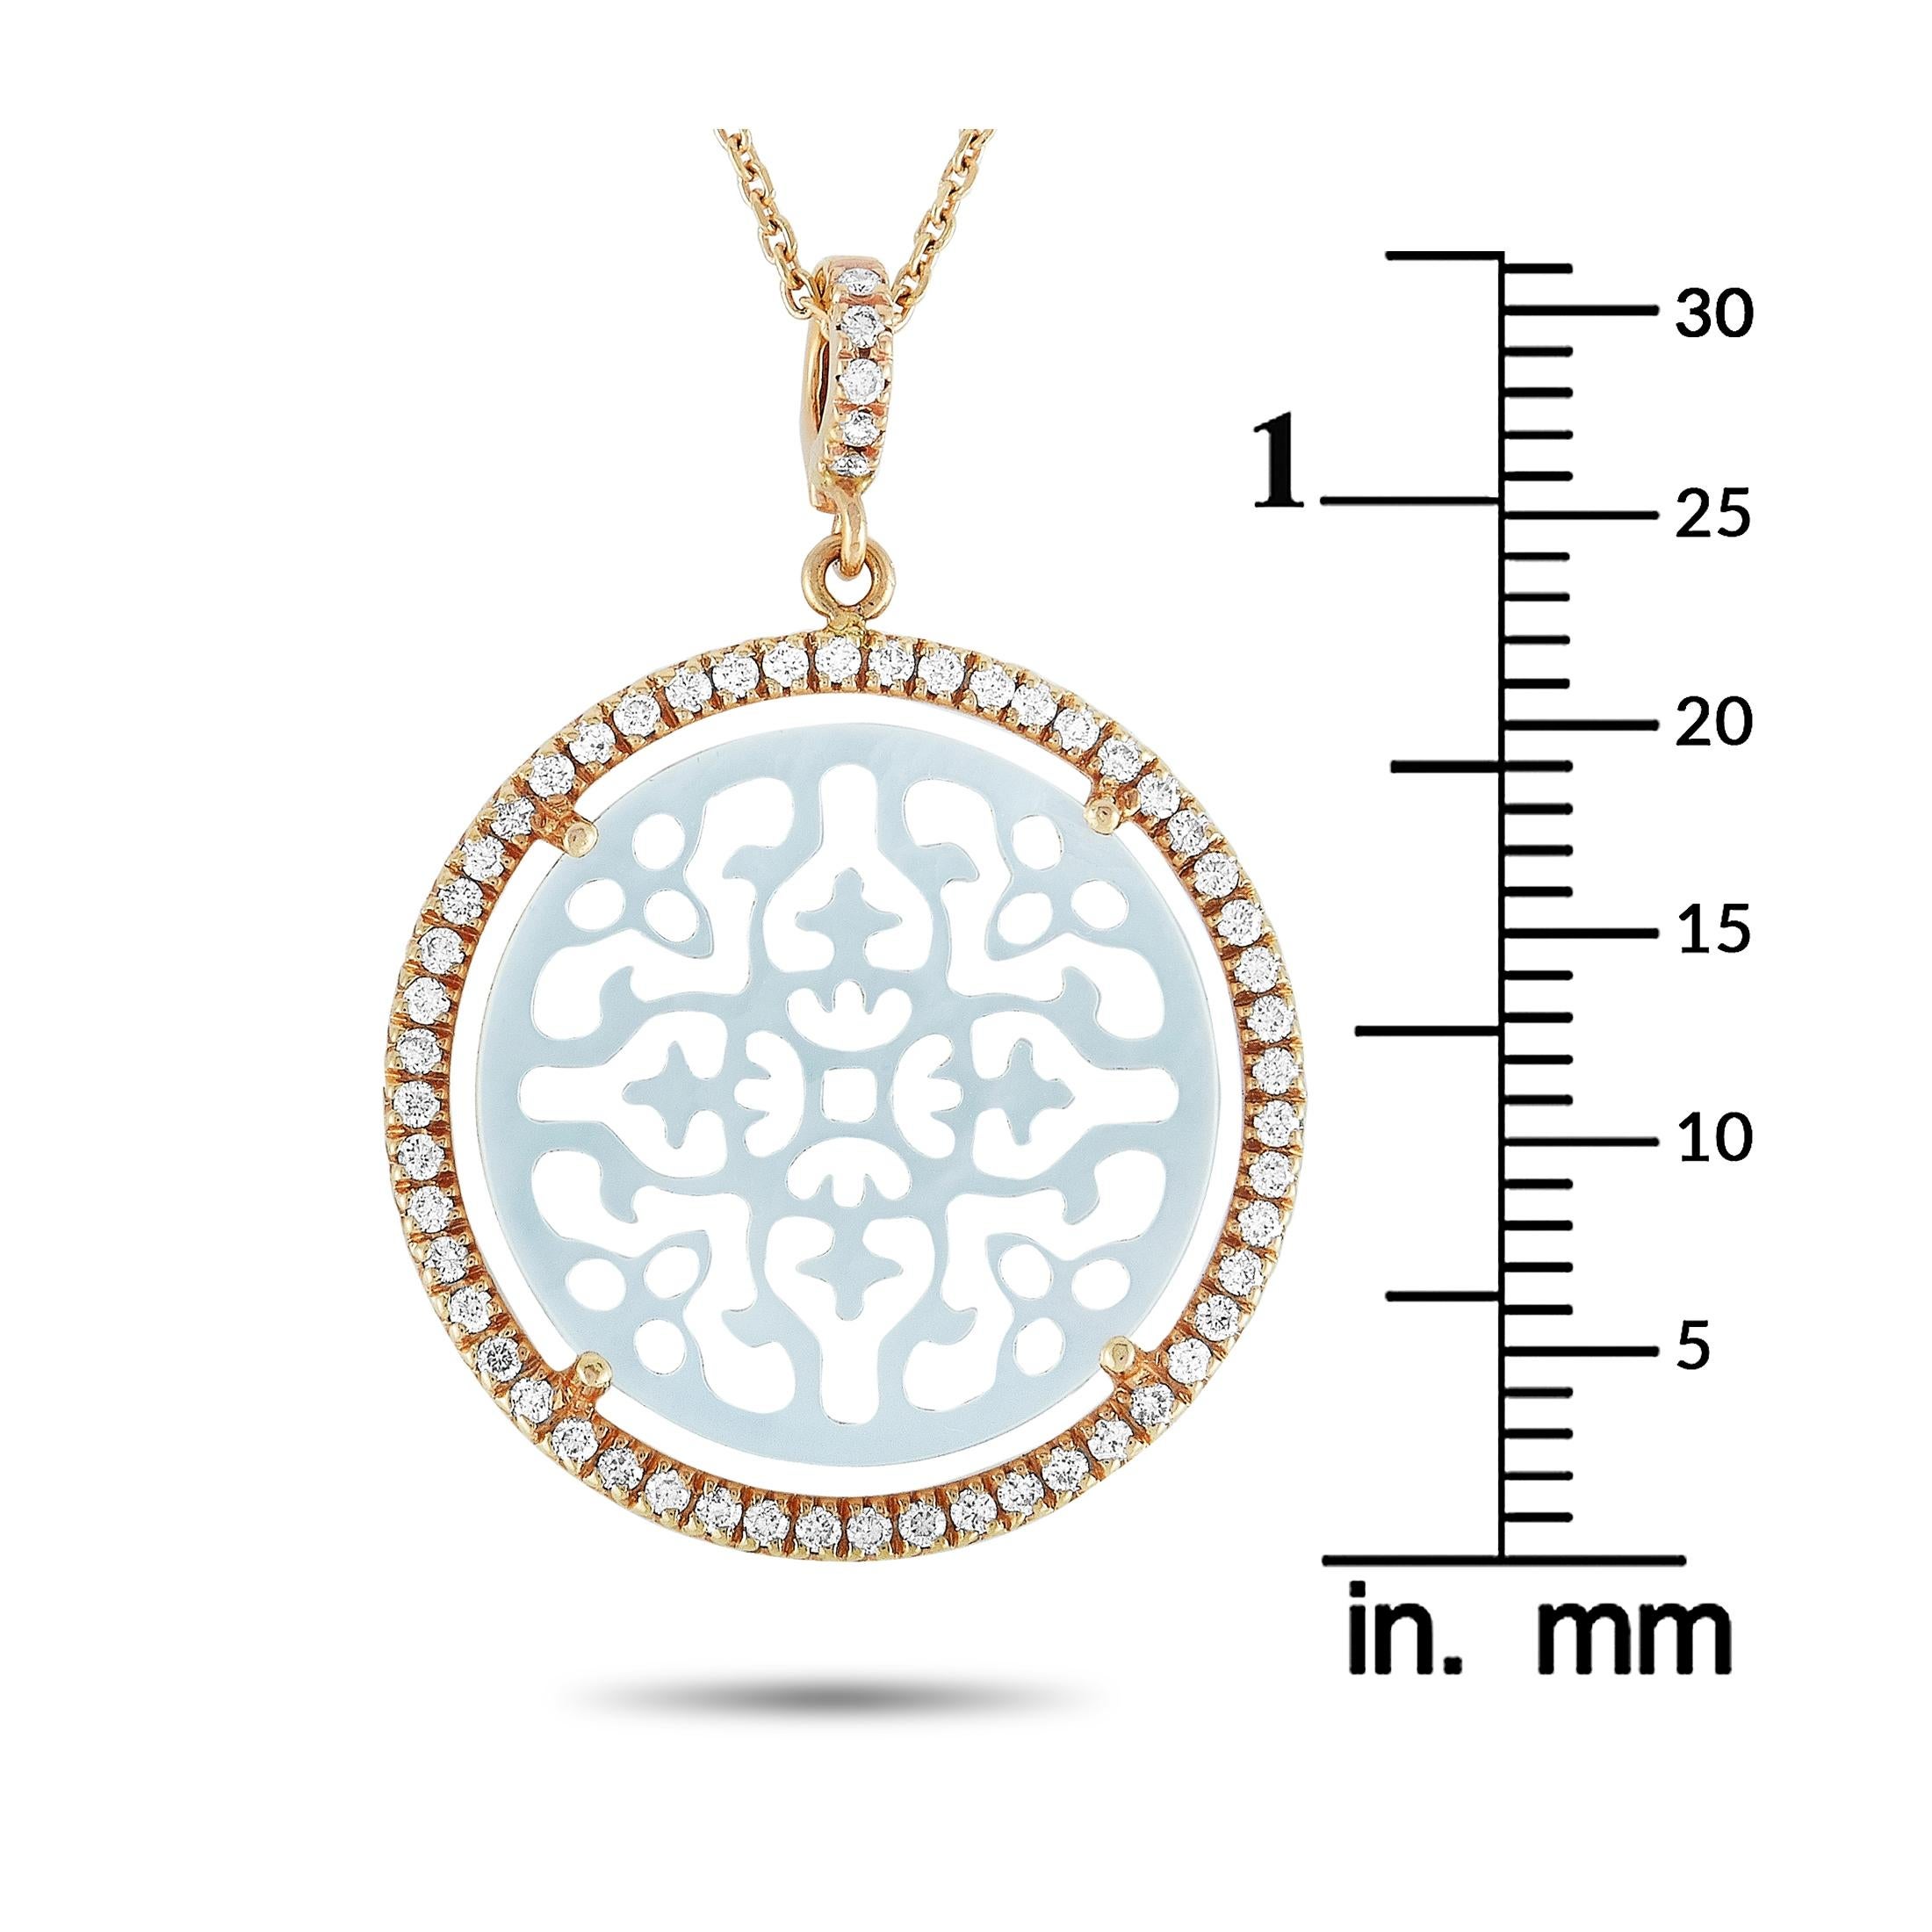 Round Cut Zoccai 18 Karat Gold 0.46 Carat Diamond and Mother of Pearl Pendant Necklace